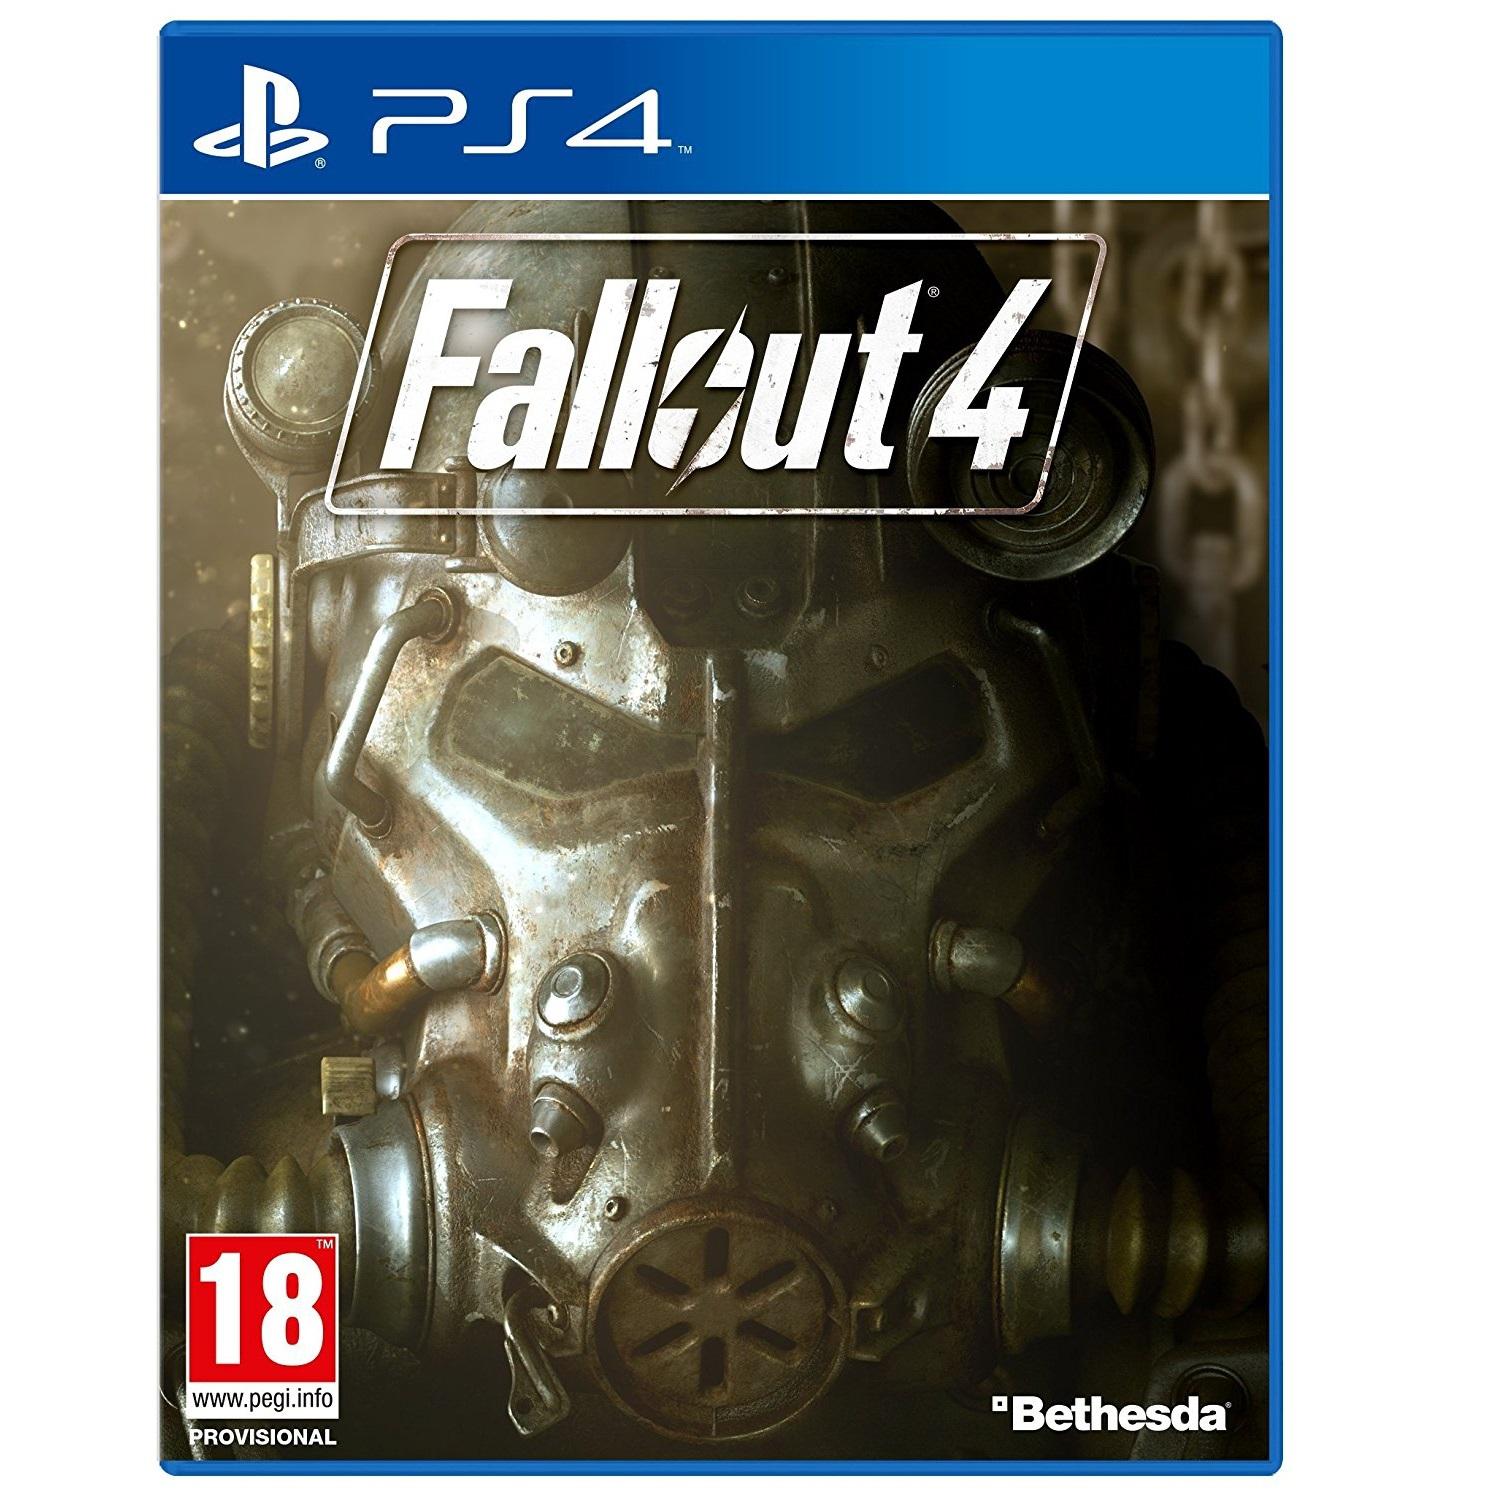 《Fallout 4》 辐射4 PS4 光盘版游戏 欧版